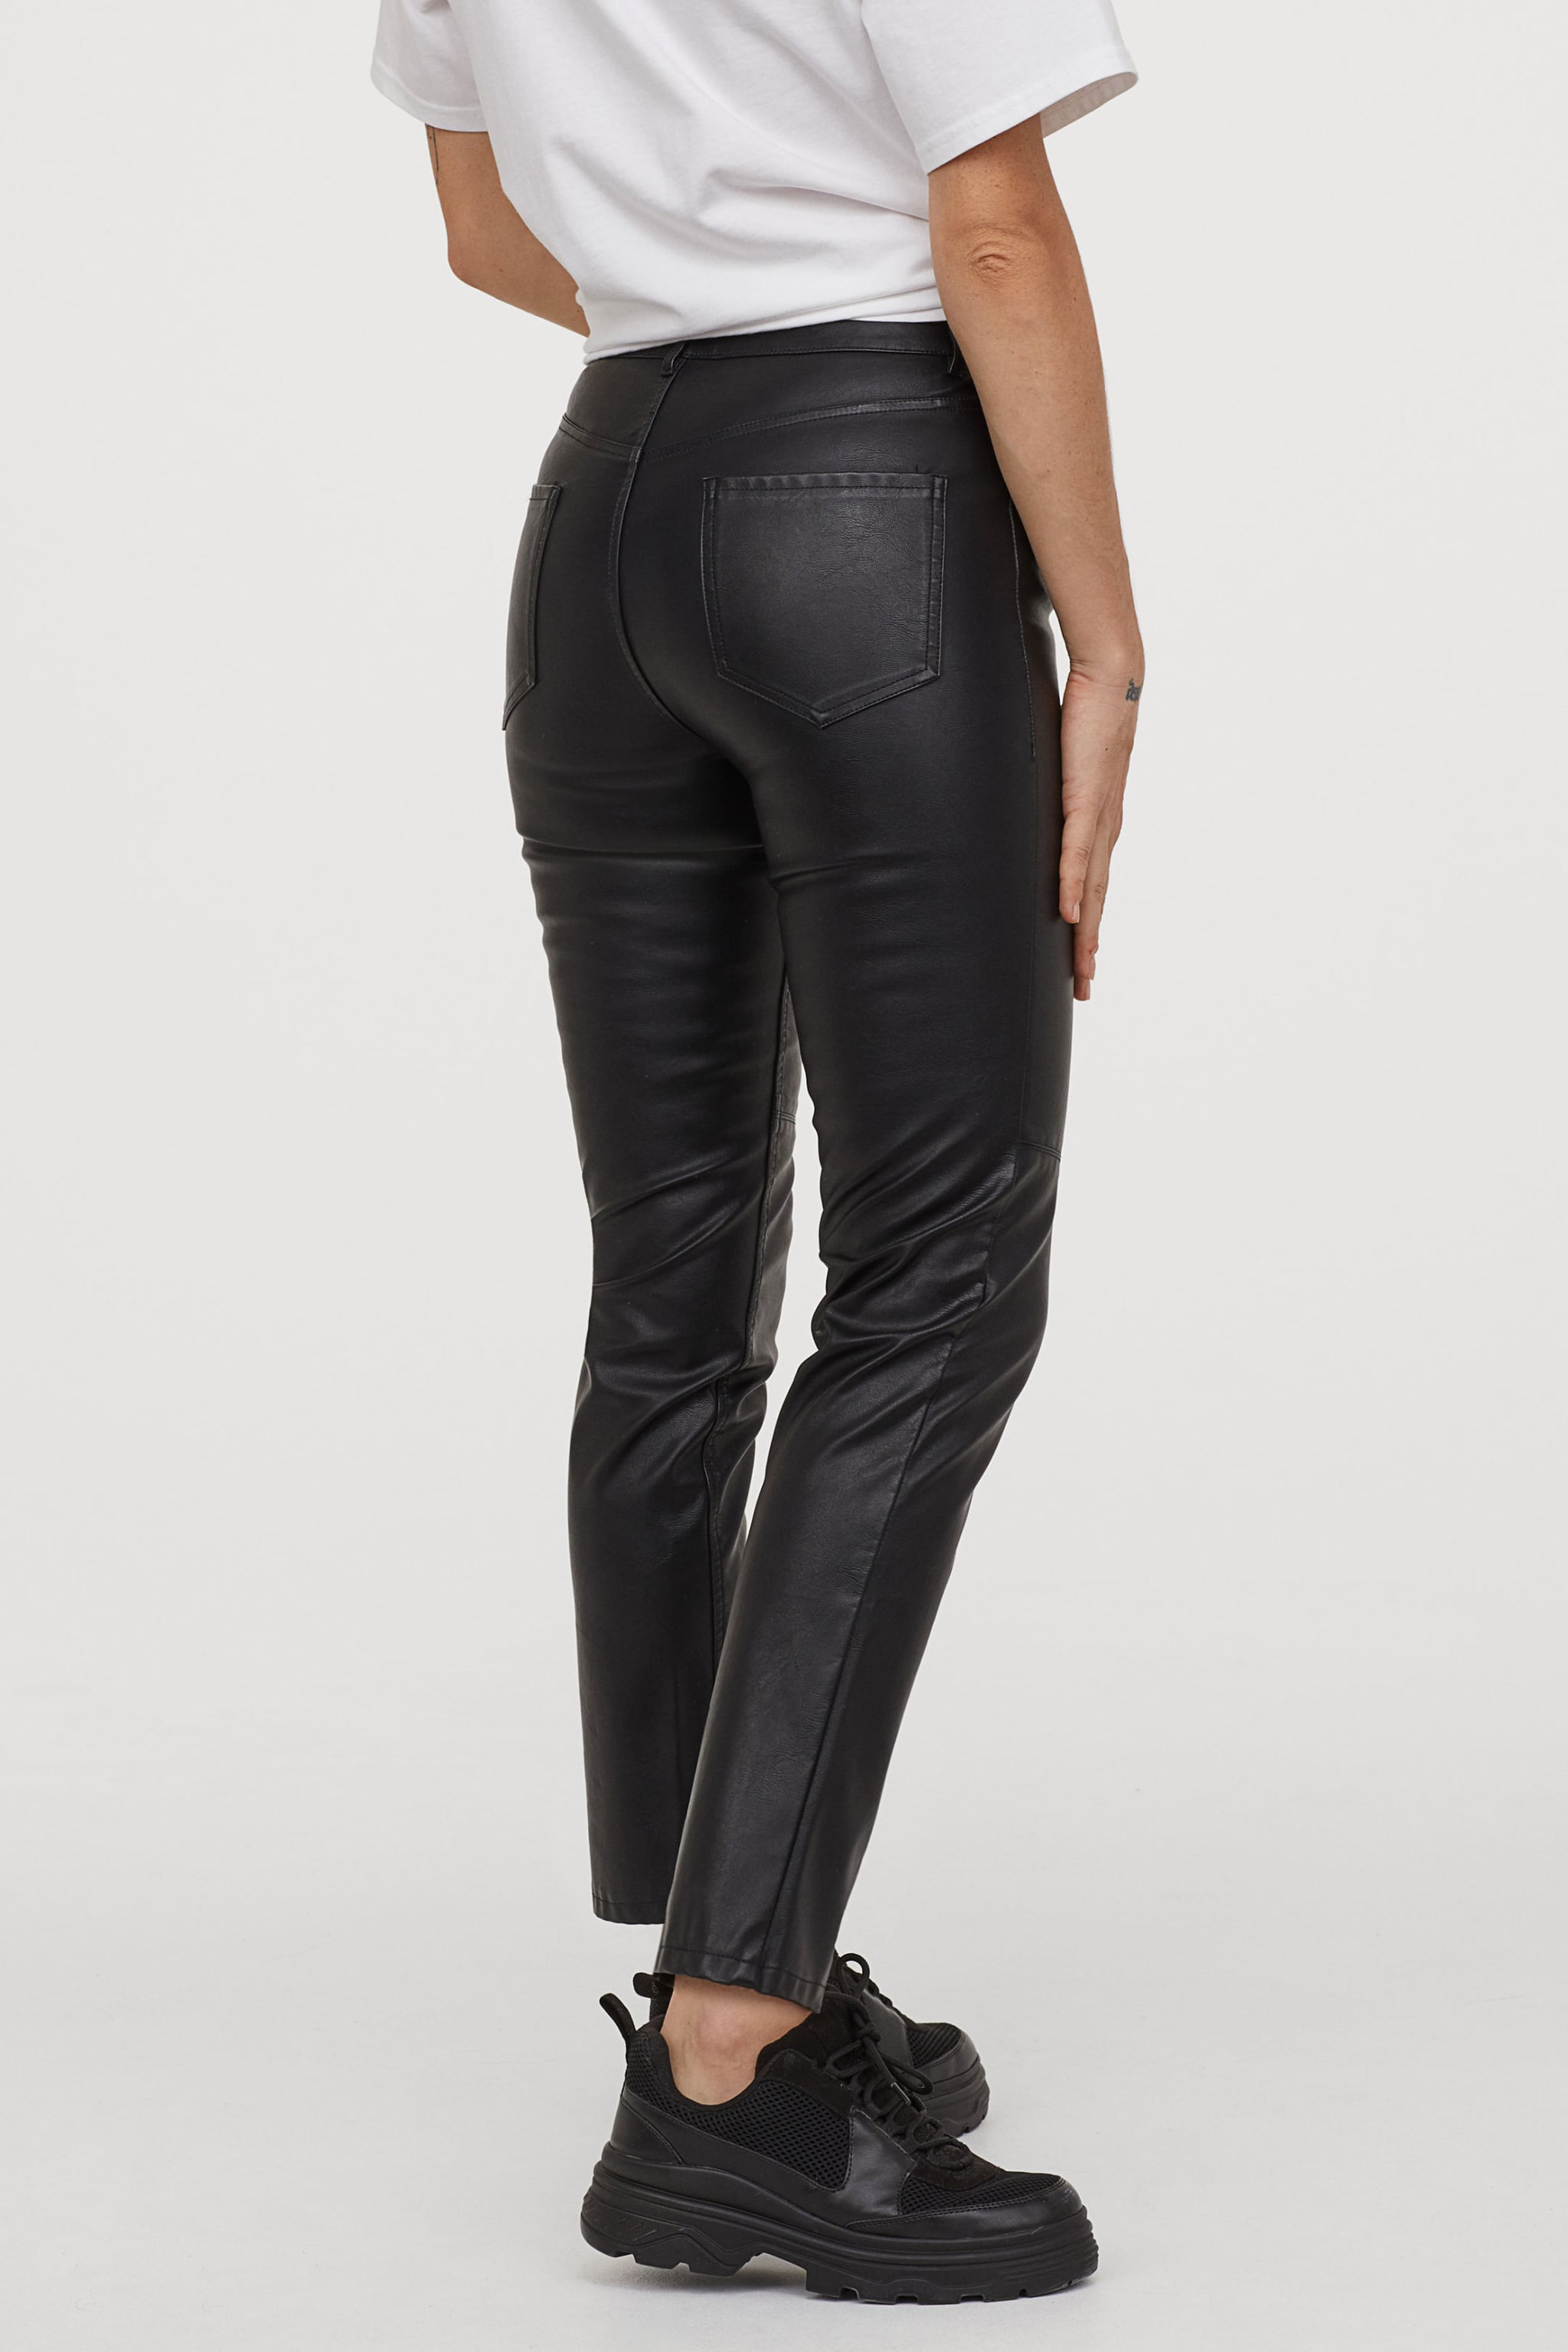 H&M Faux Leather Pants  Jennifer Aniston Has an Idea: Leather